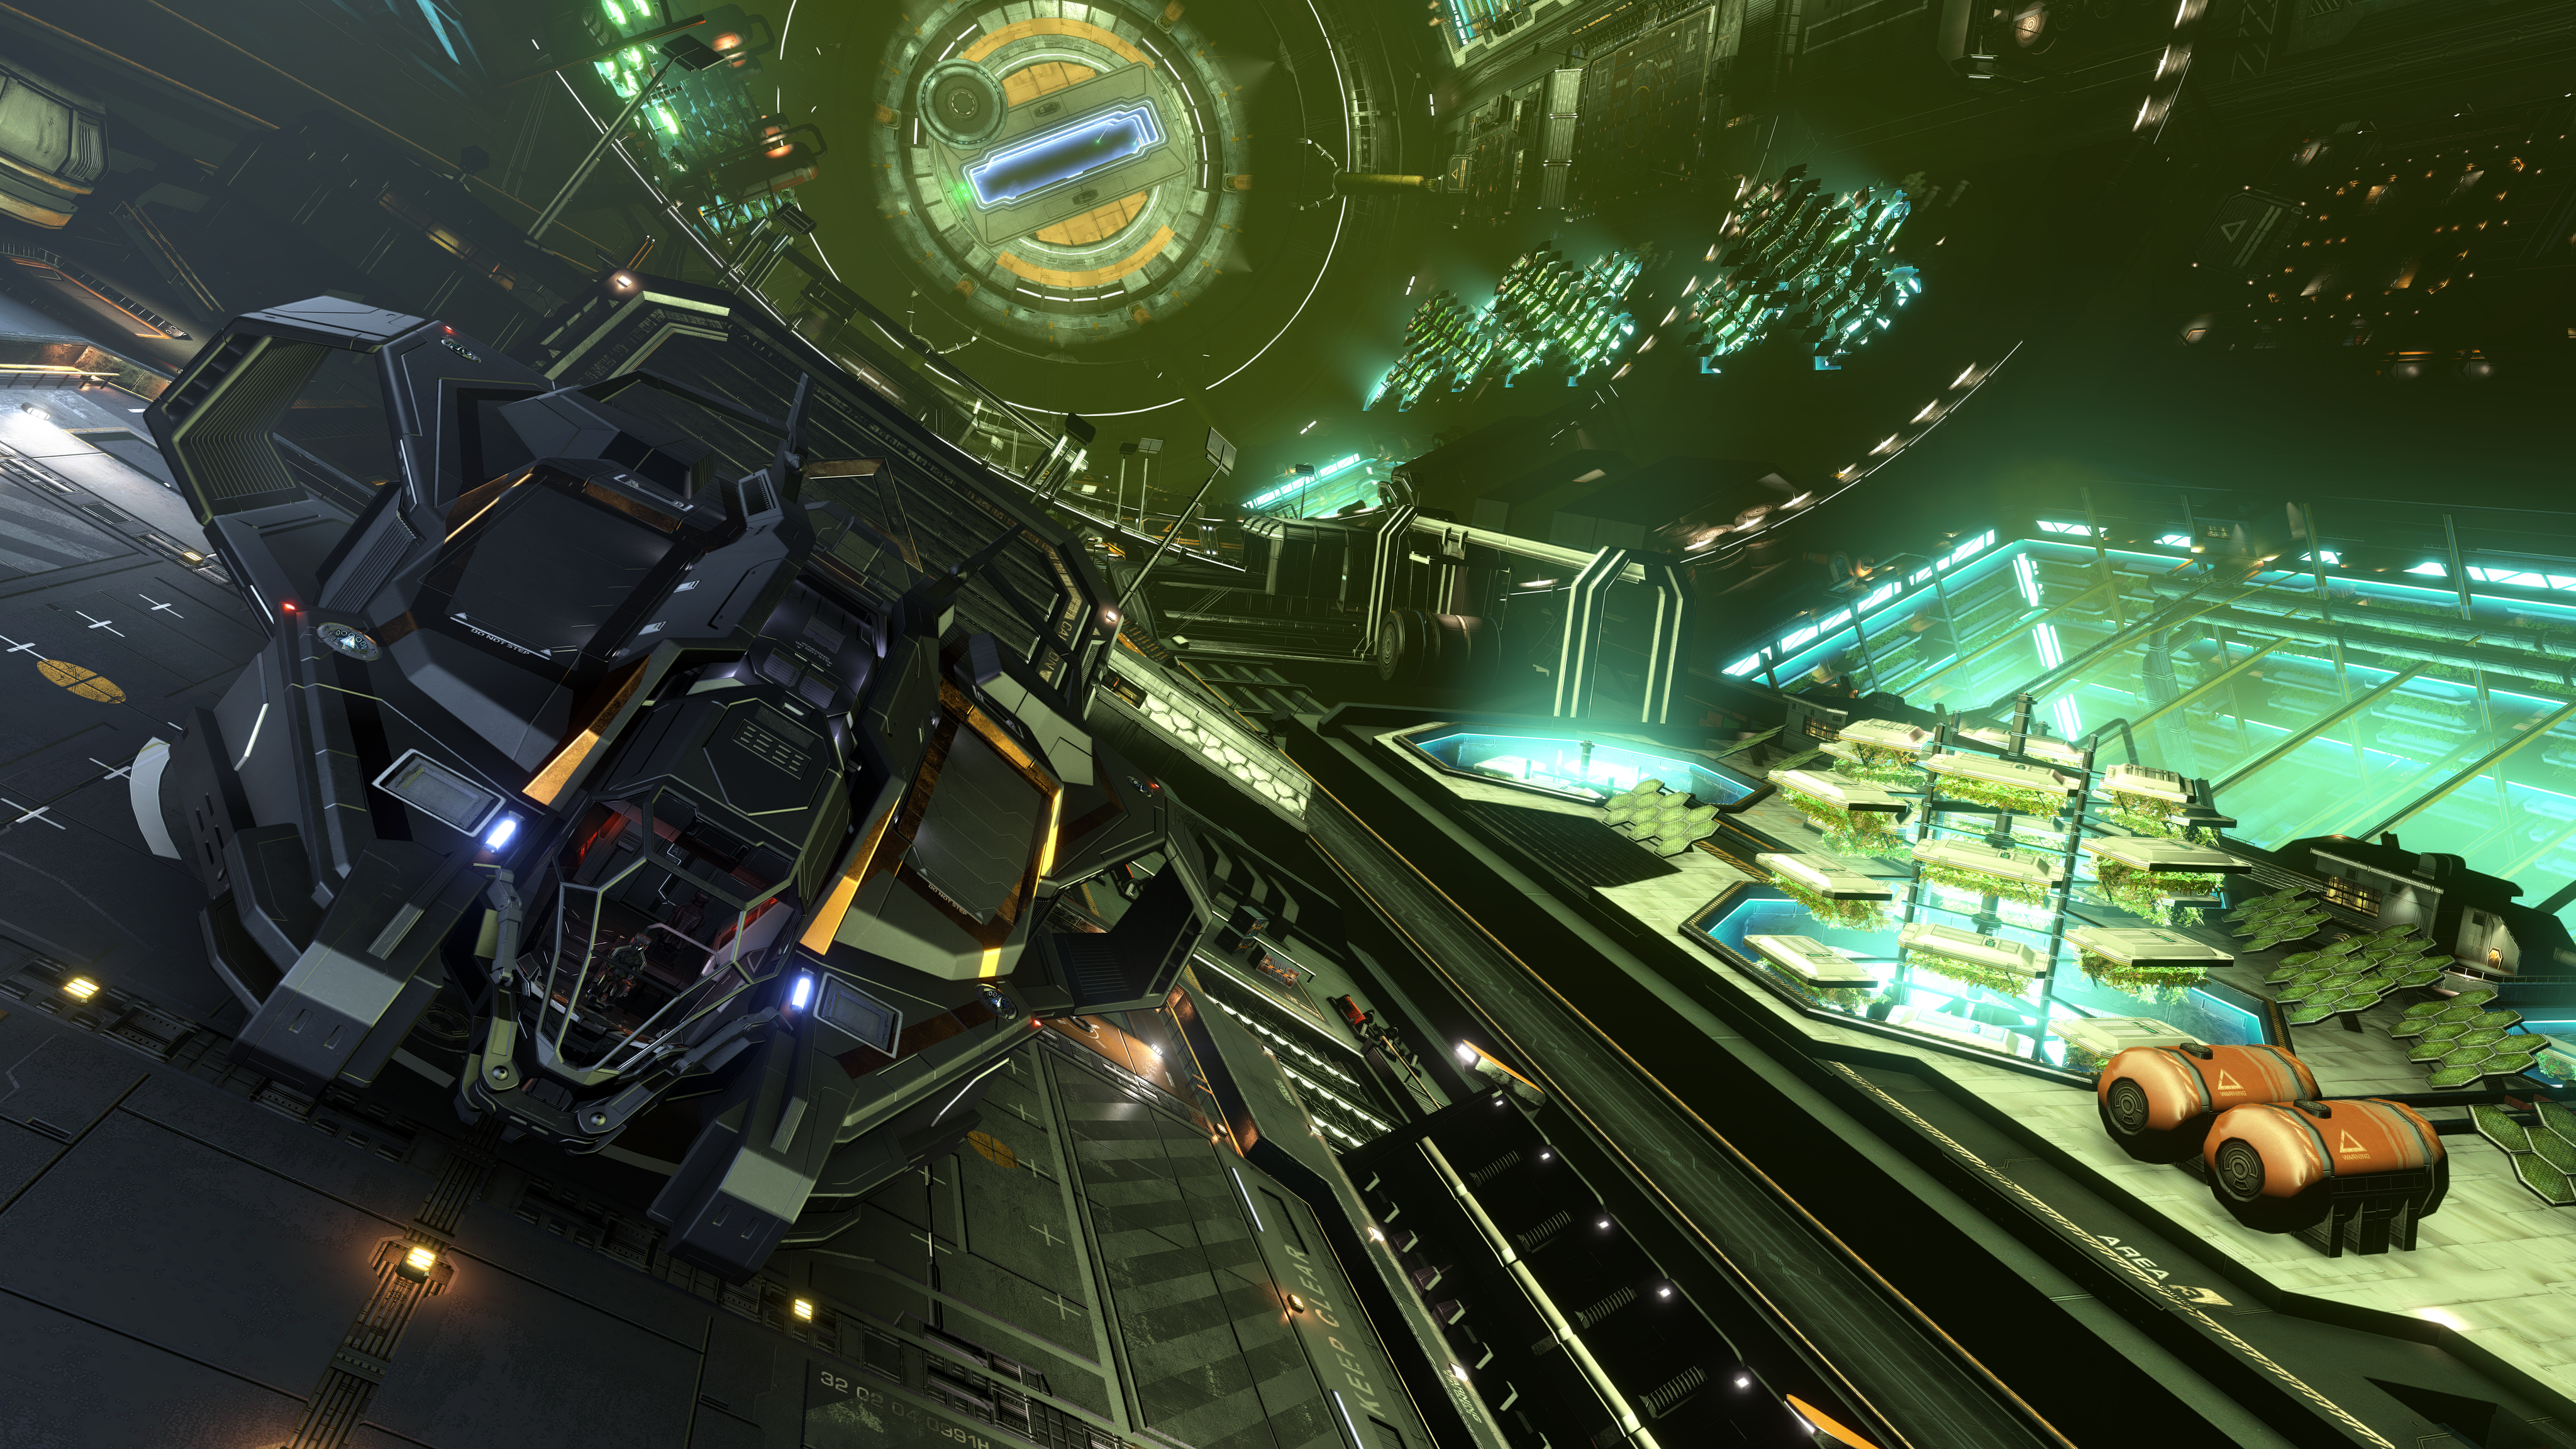 General 4096x2304 Vulture (spaceship) Elite: Dangerous spaceship science fiction video games Frontier Developments